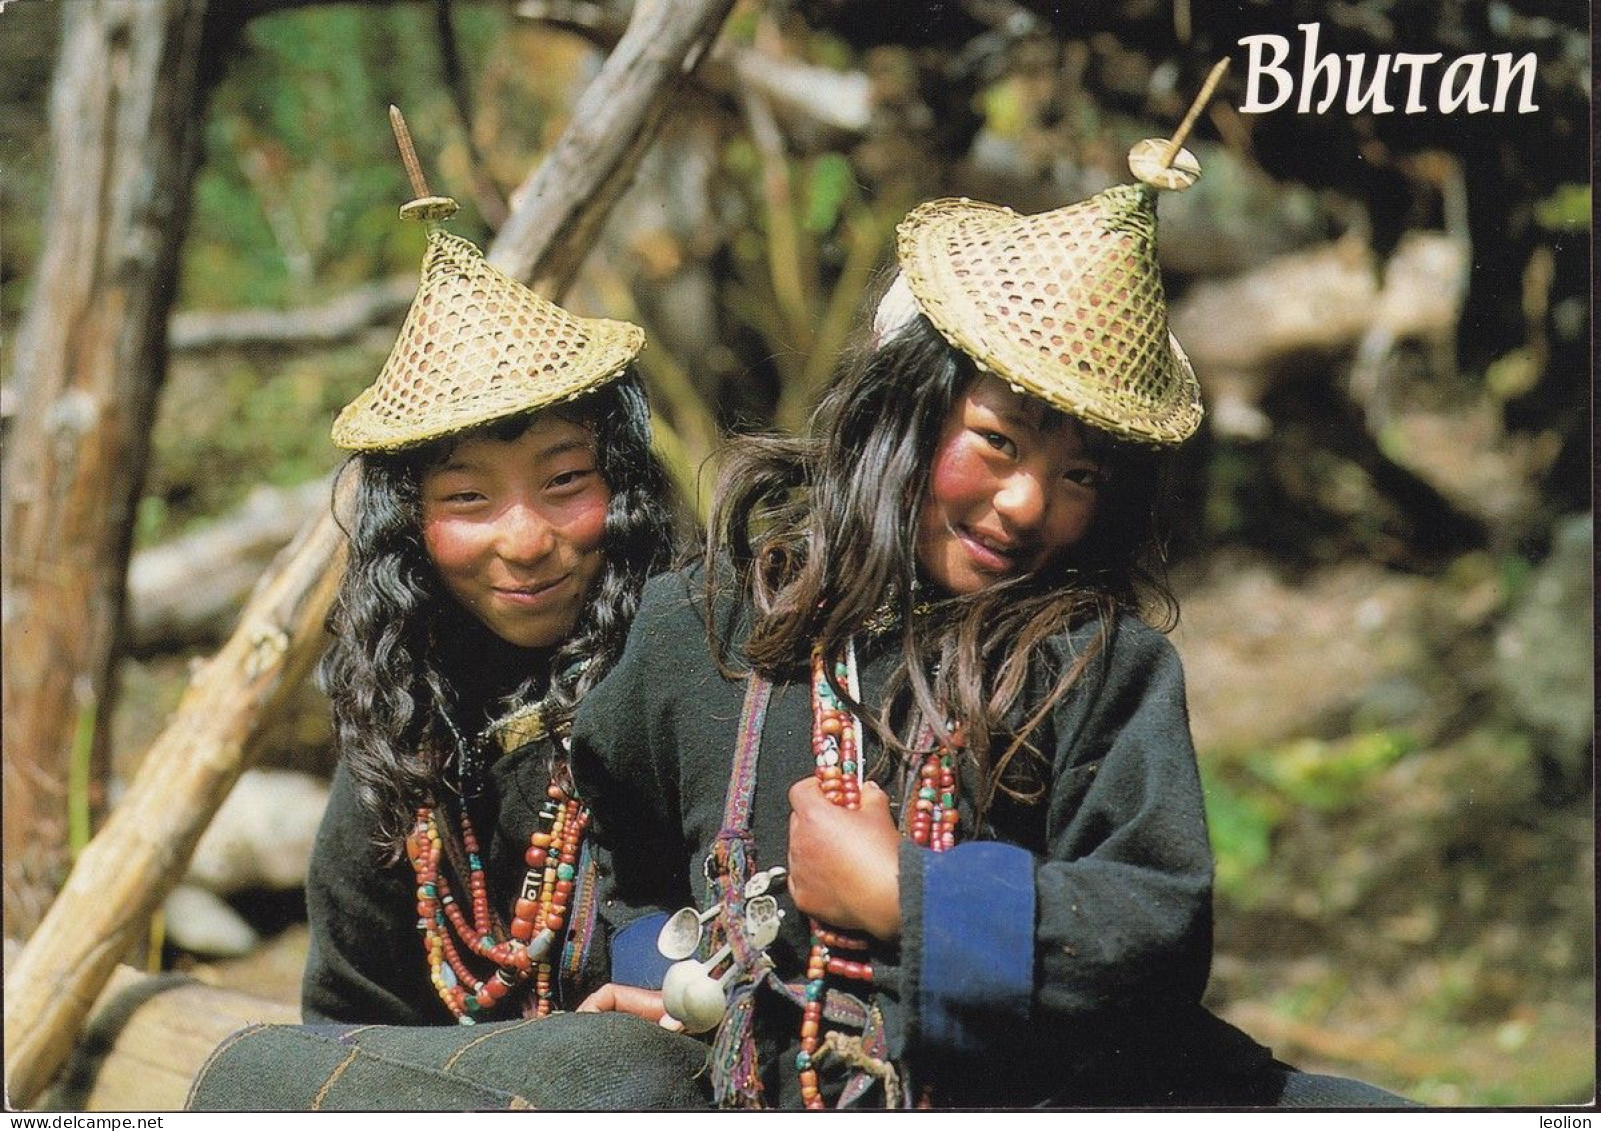 BHUTAN Village Girls LAYA Etho Metho Tours / Glenn Rowley / Himalayan Images Picture Postcard BHOUTAN - Bhoutan